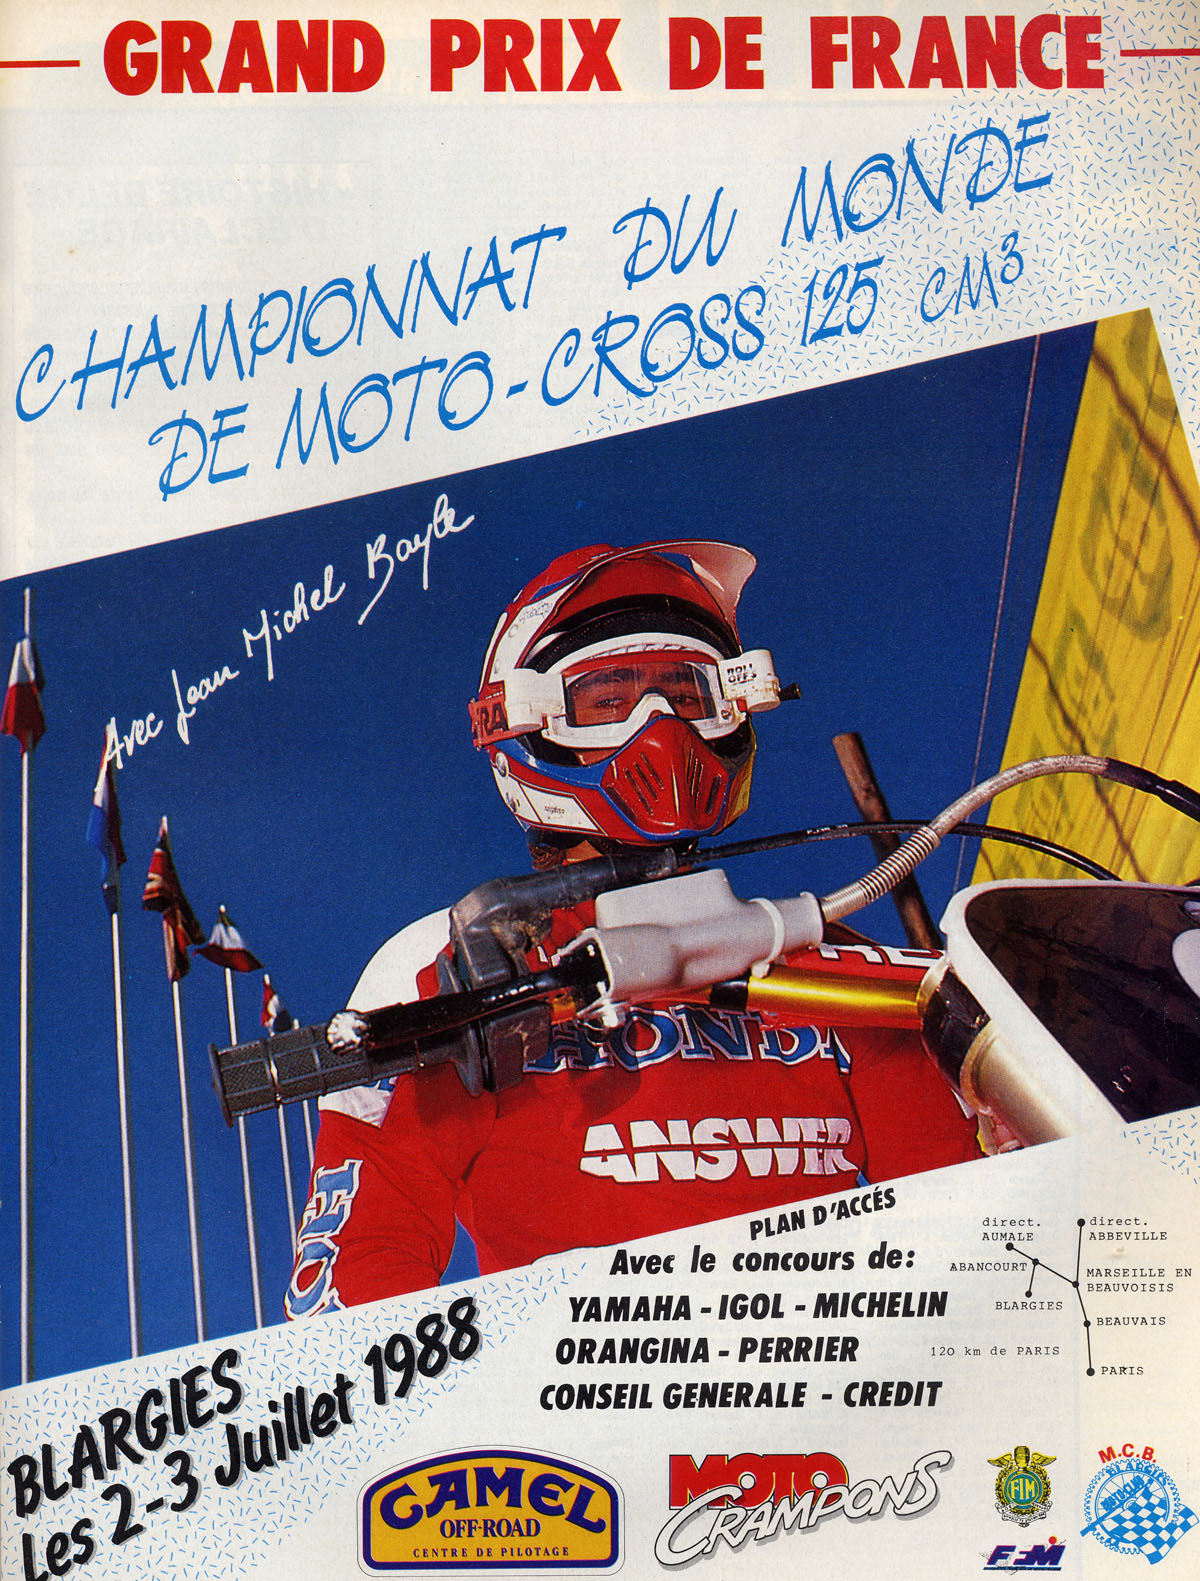 Jean-Michel est l'attraction du Grand Prix de France 125 !!!